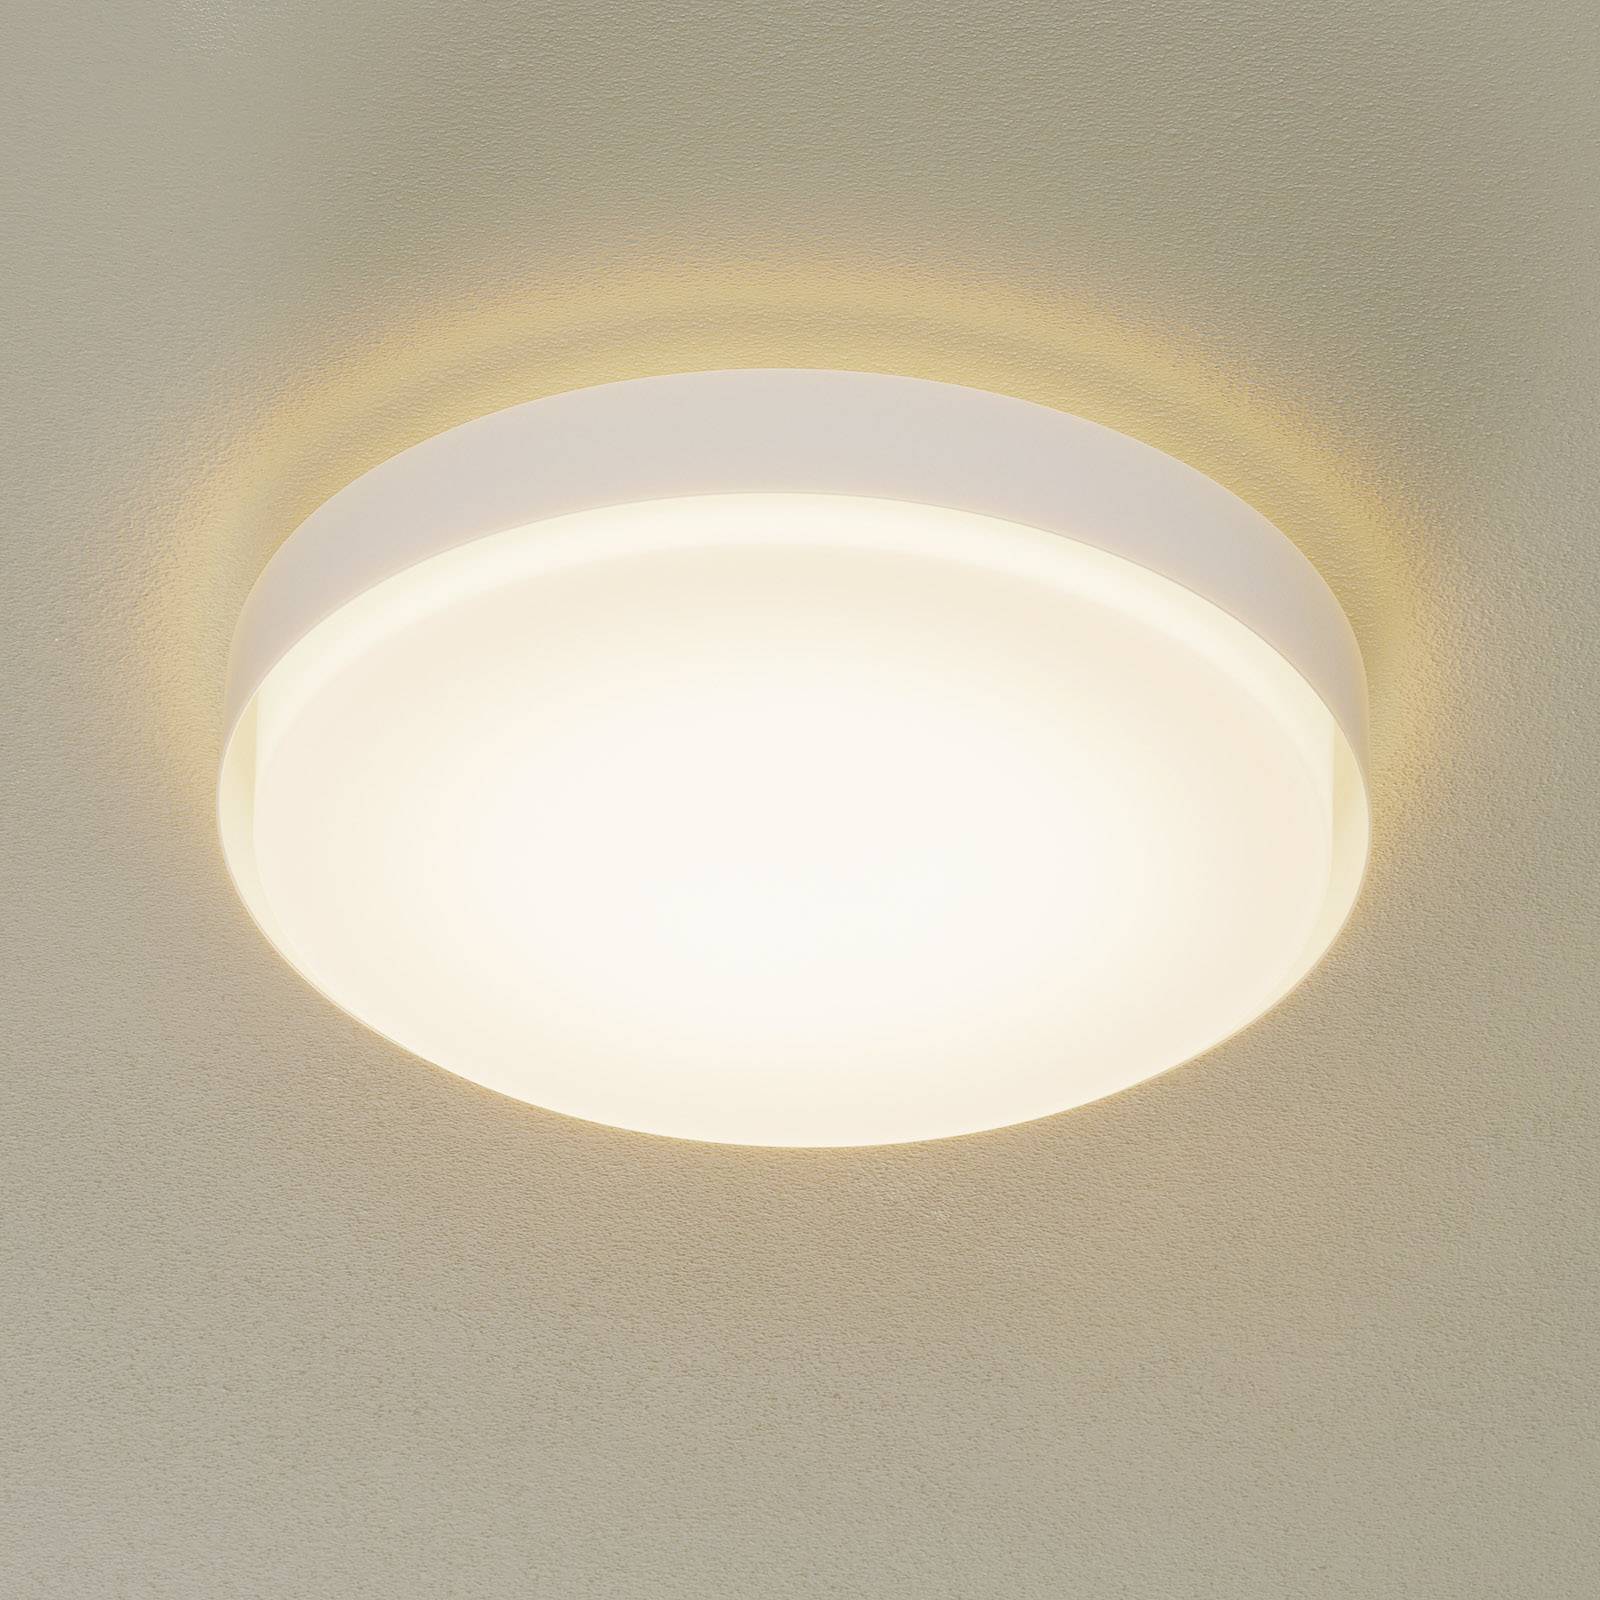 BEGA 34279 lampa sufitowa LED, biała Ø 42 cm, DALI